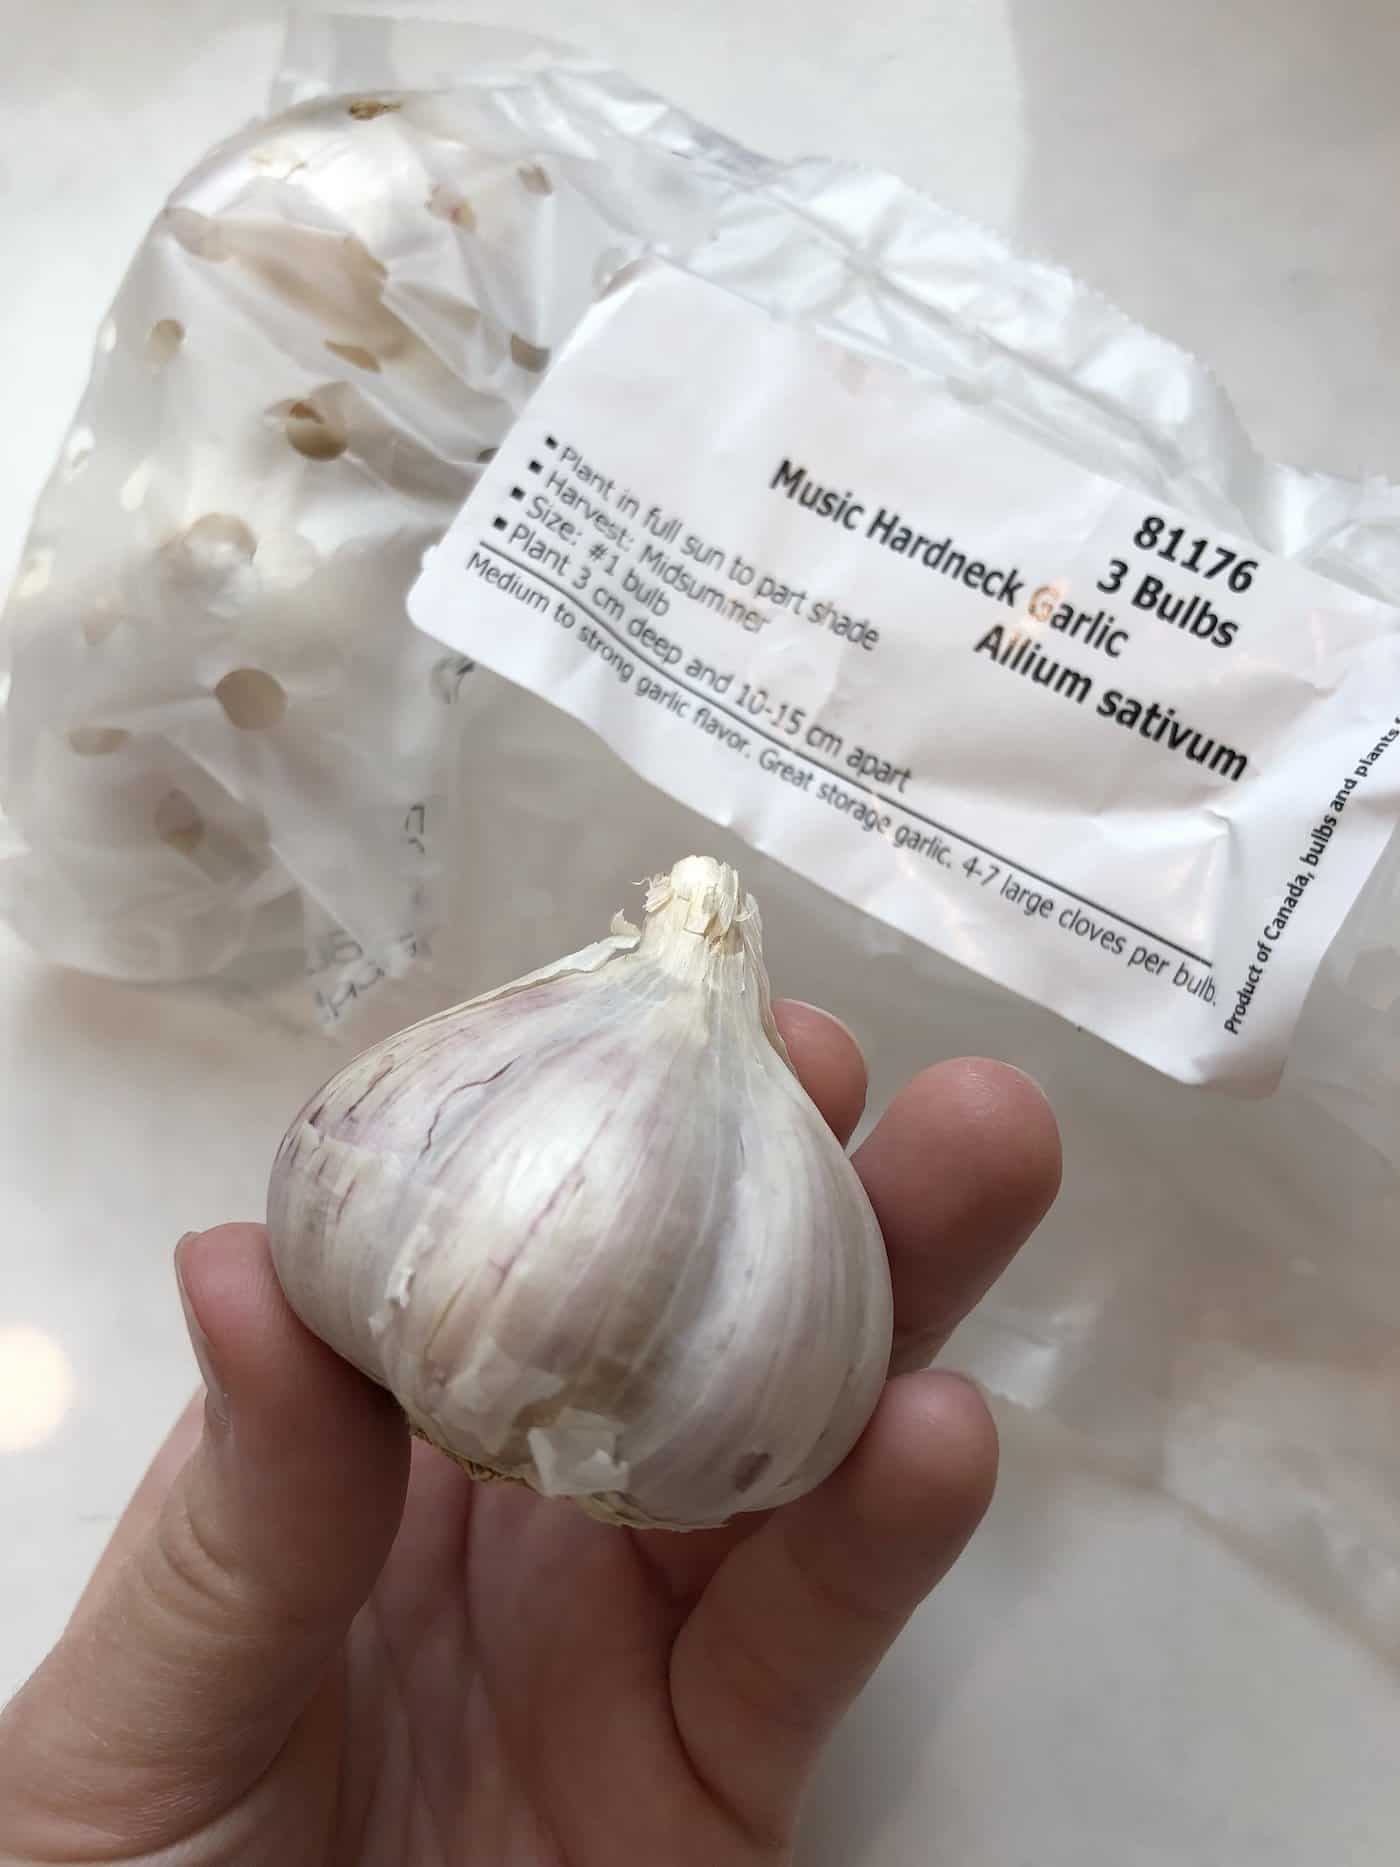 Music garlic bulb